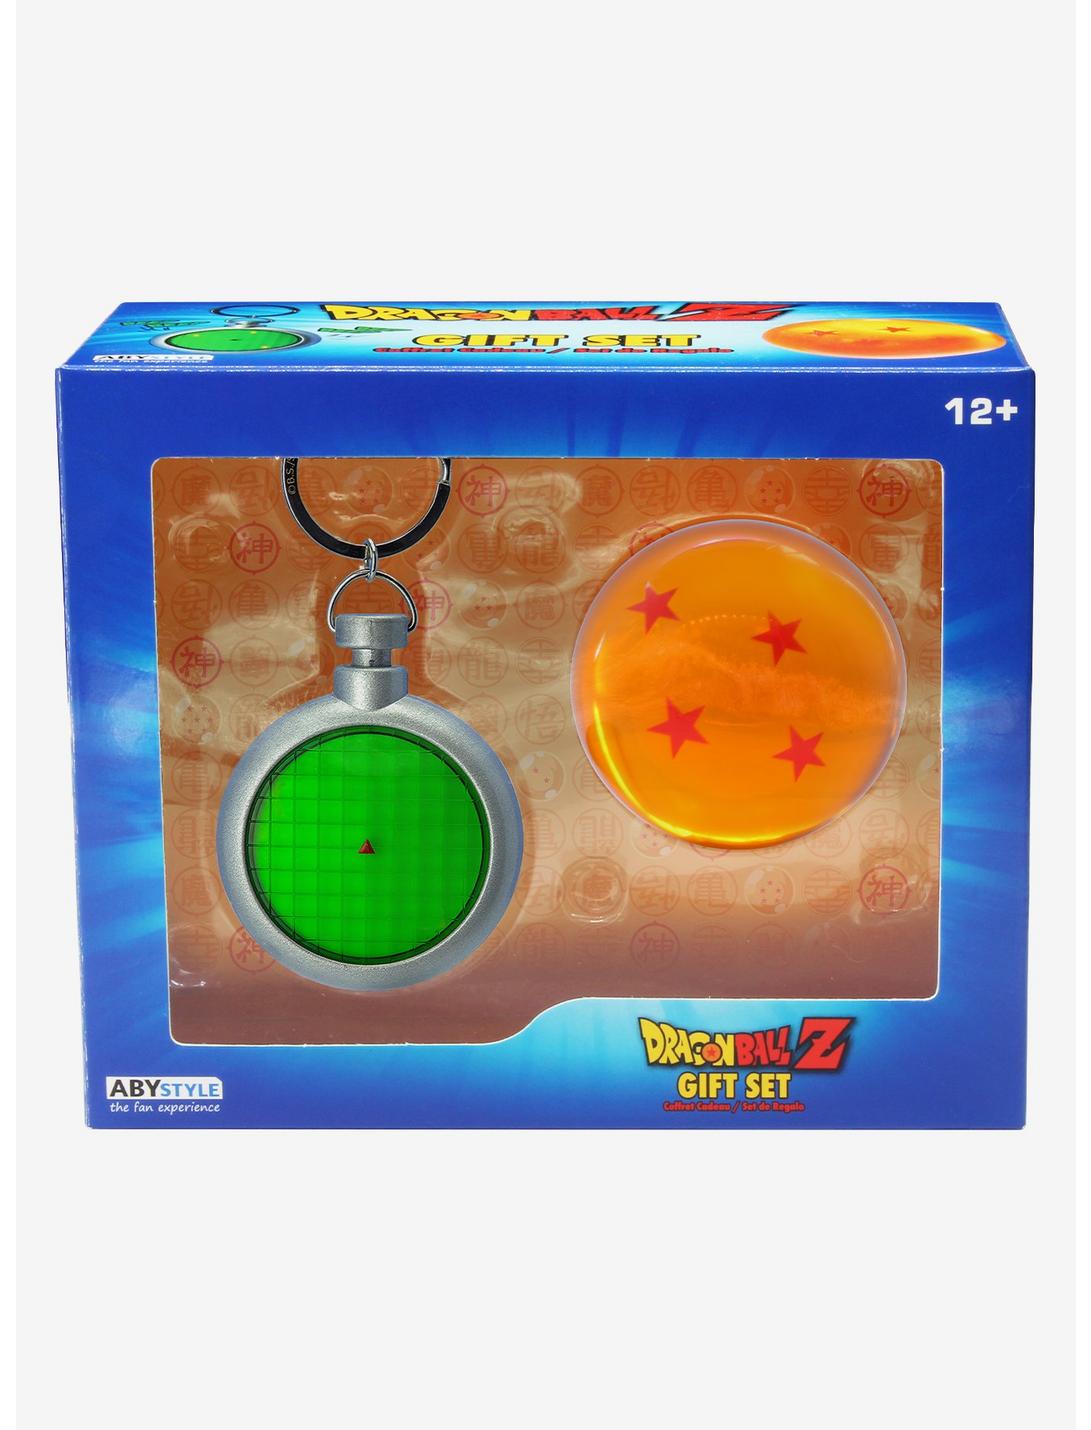 Radar Keychain & Dragon Ball Dragon Ball Gift Set 